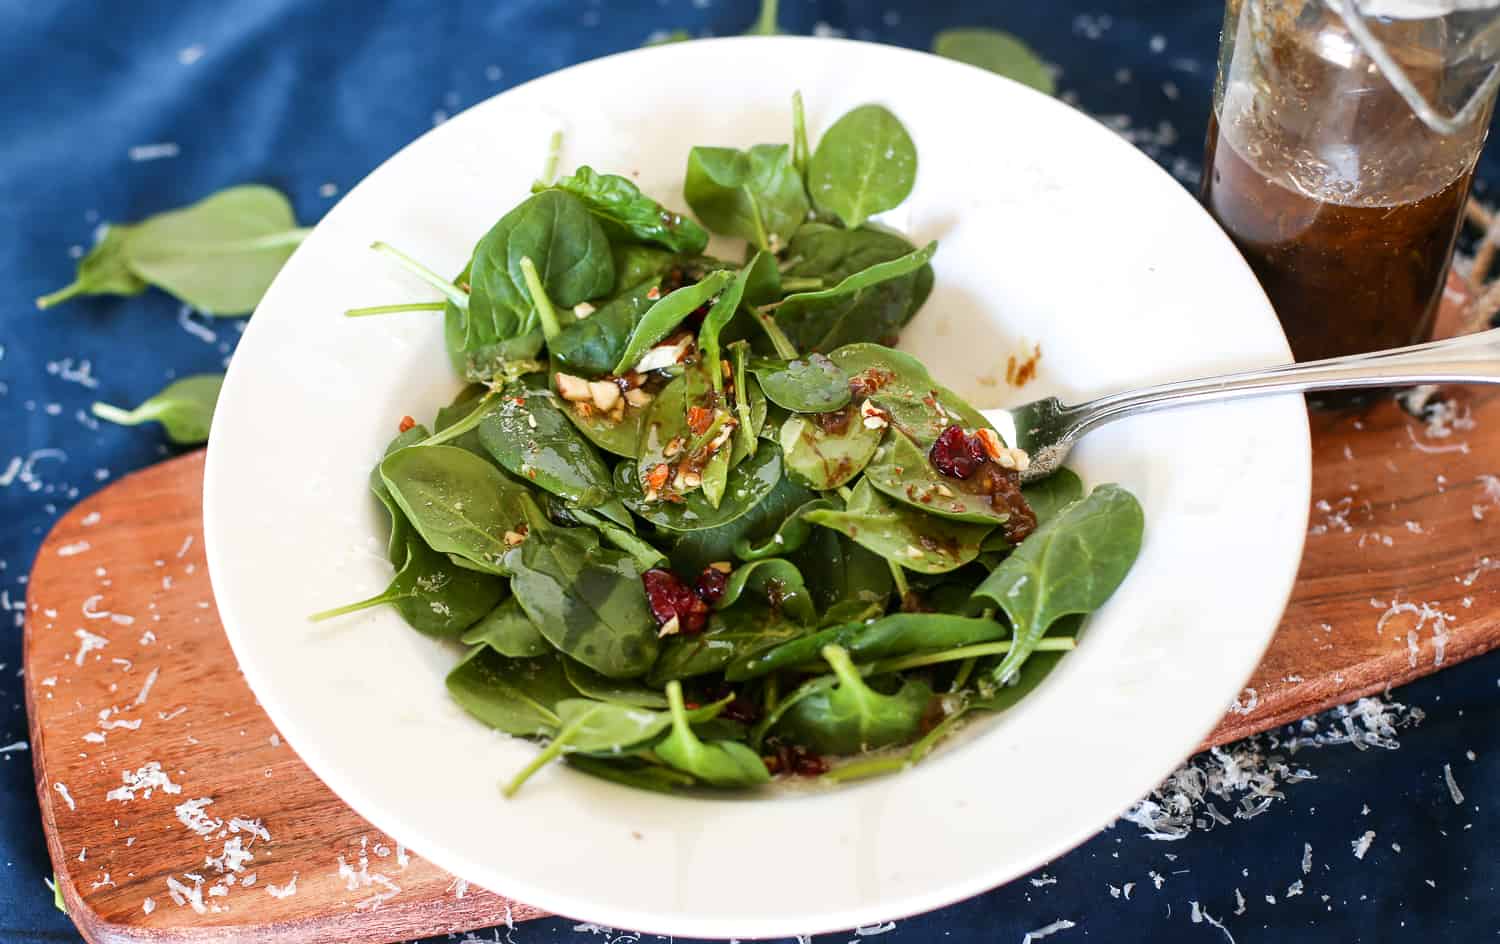 Parmesan Balsamic Vinaigrette over a spinach salad.